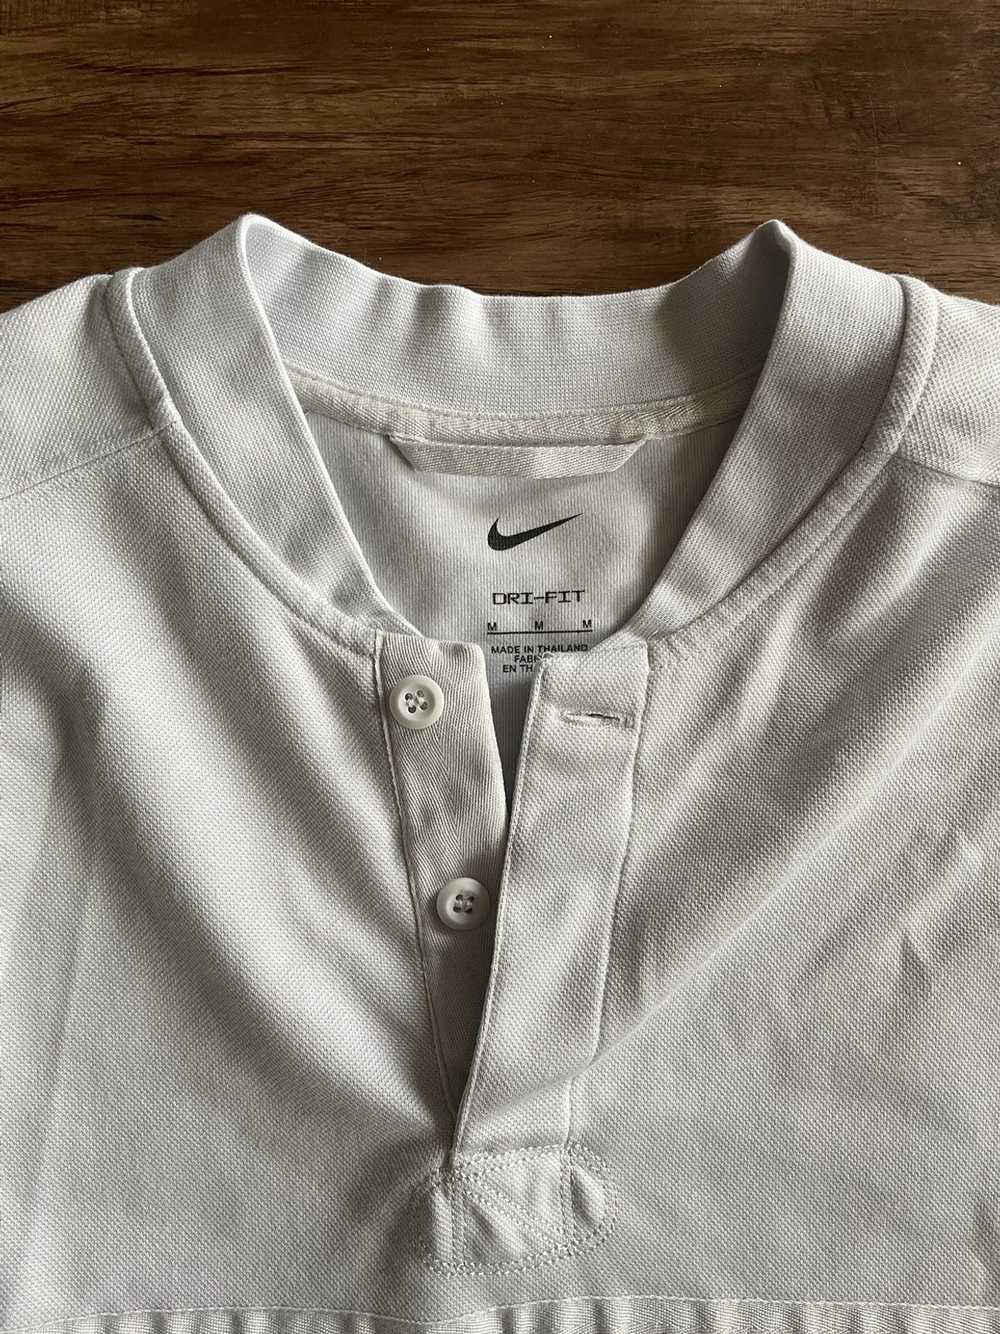 Nike Golf Shirt - image 3